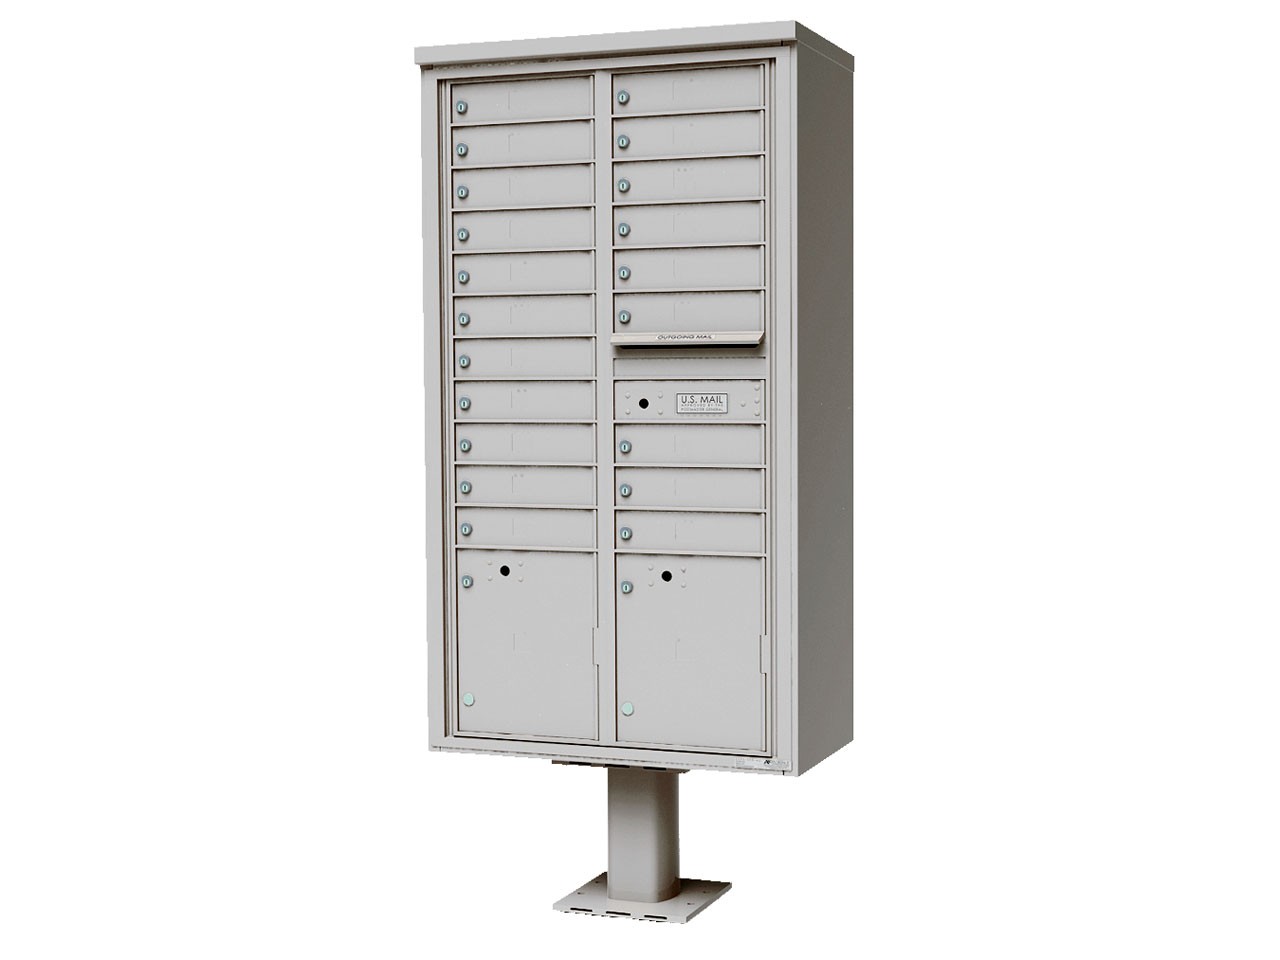 20-tenant doors with 2-15" H parcel lockers